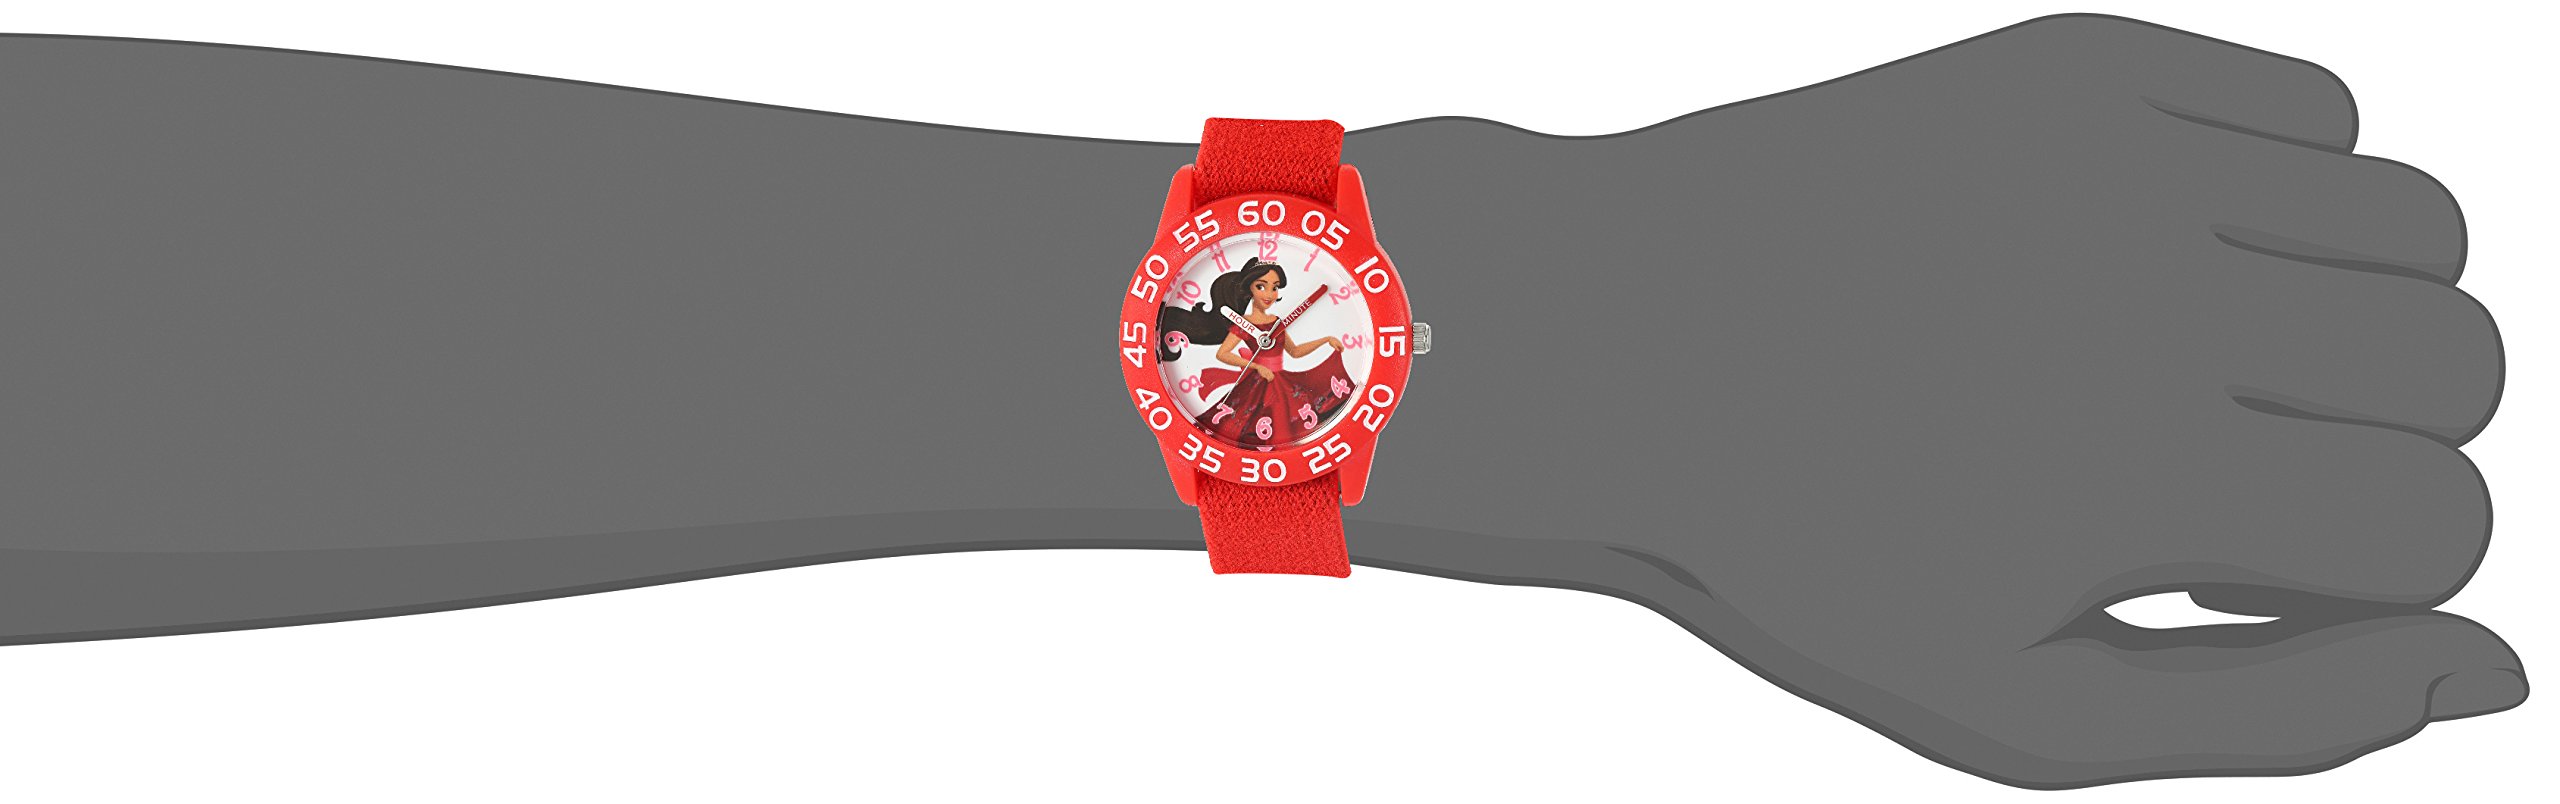 Disney Girl's 'Elena of Avalor' Quartz Plastic and Nylon Watch, Color:Red (Model: W003030)